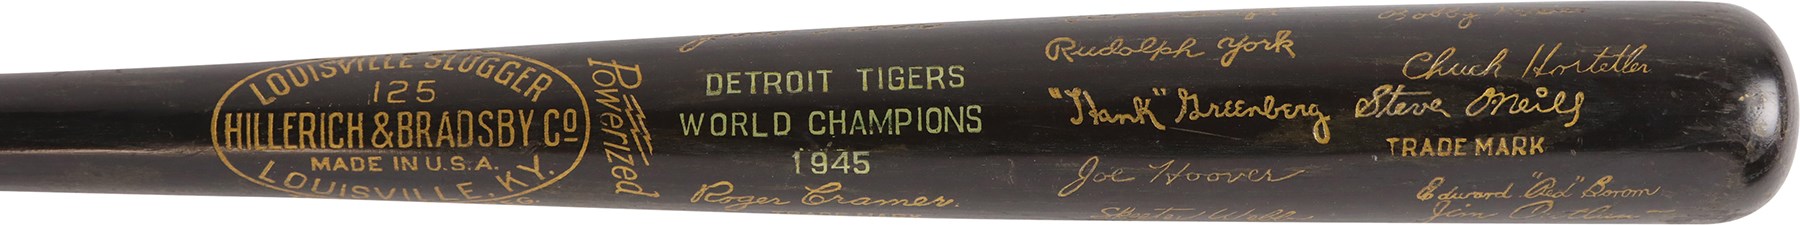 Ty Cobb and Detroit Tigers - 1945 World Champion Detroit Tigers Commemorative Black Team Bat